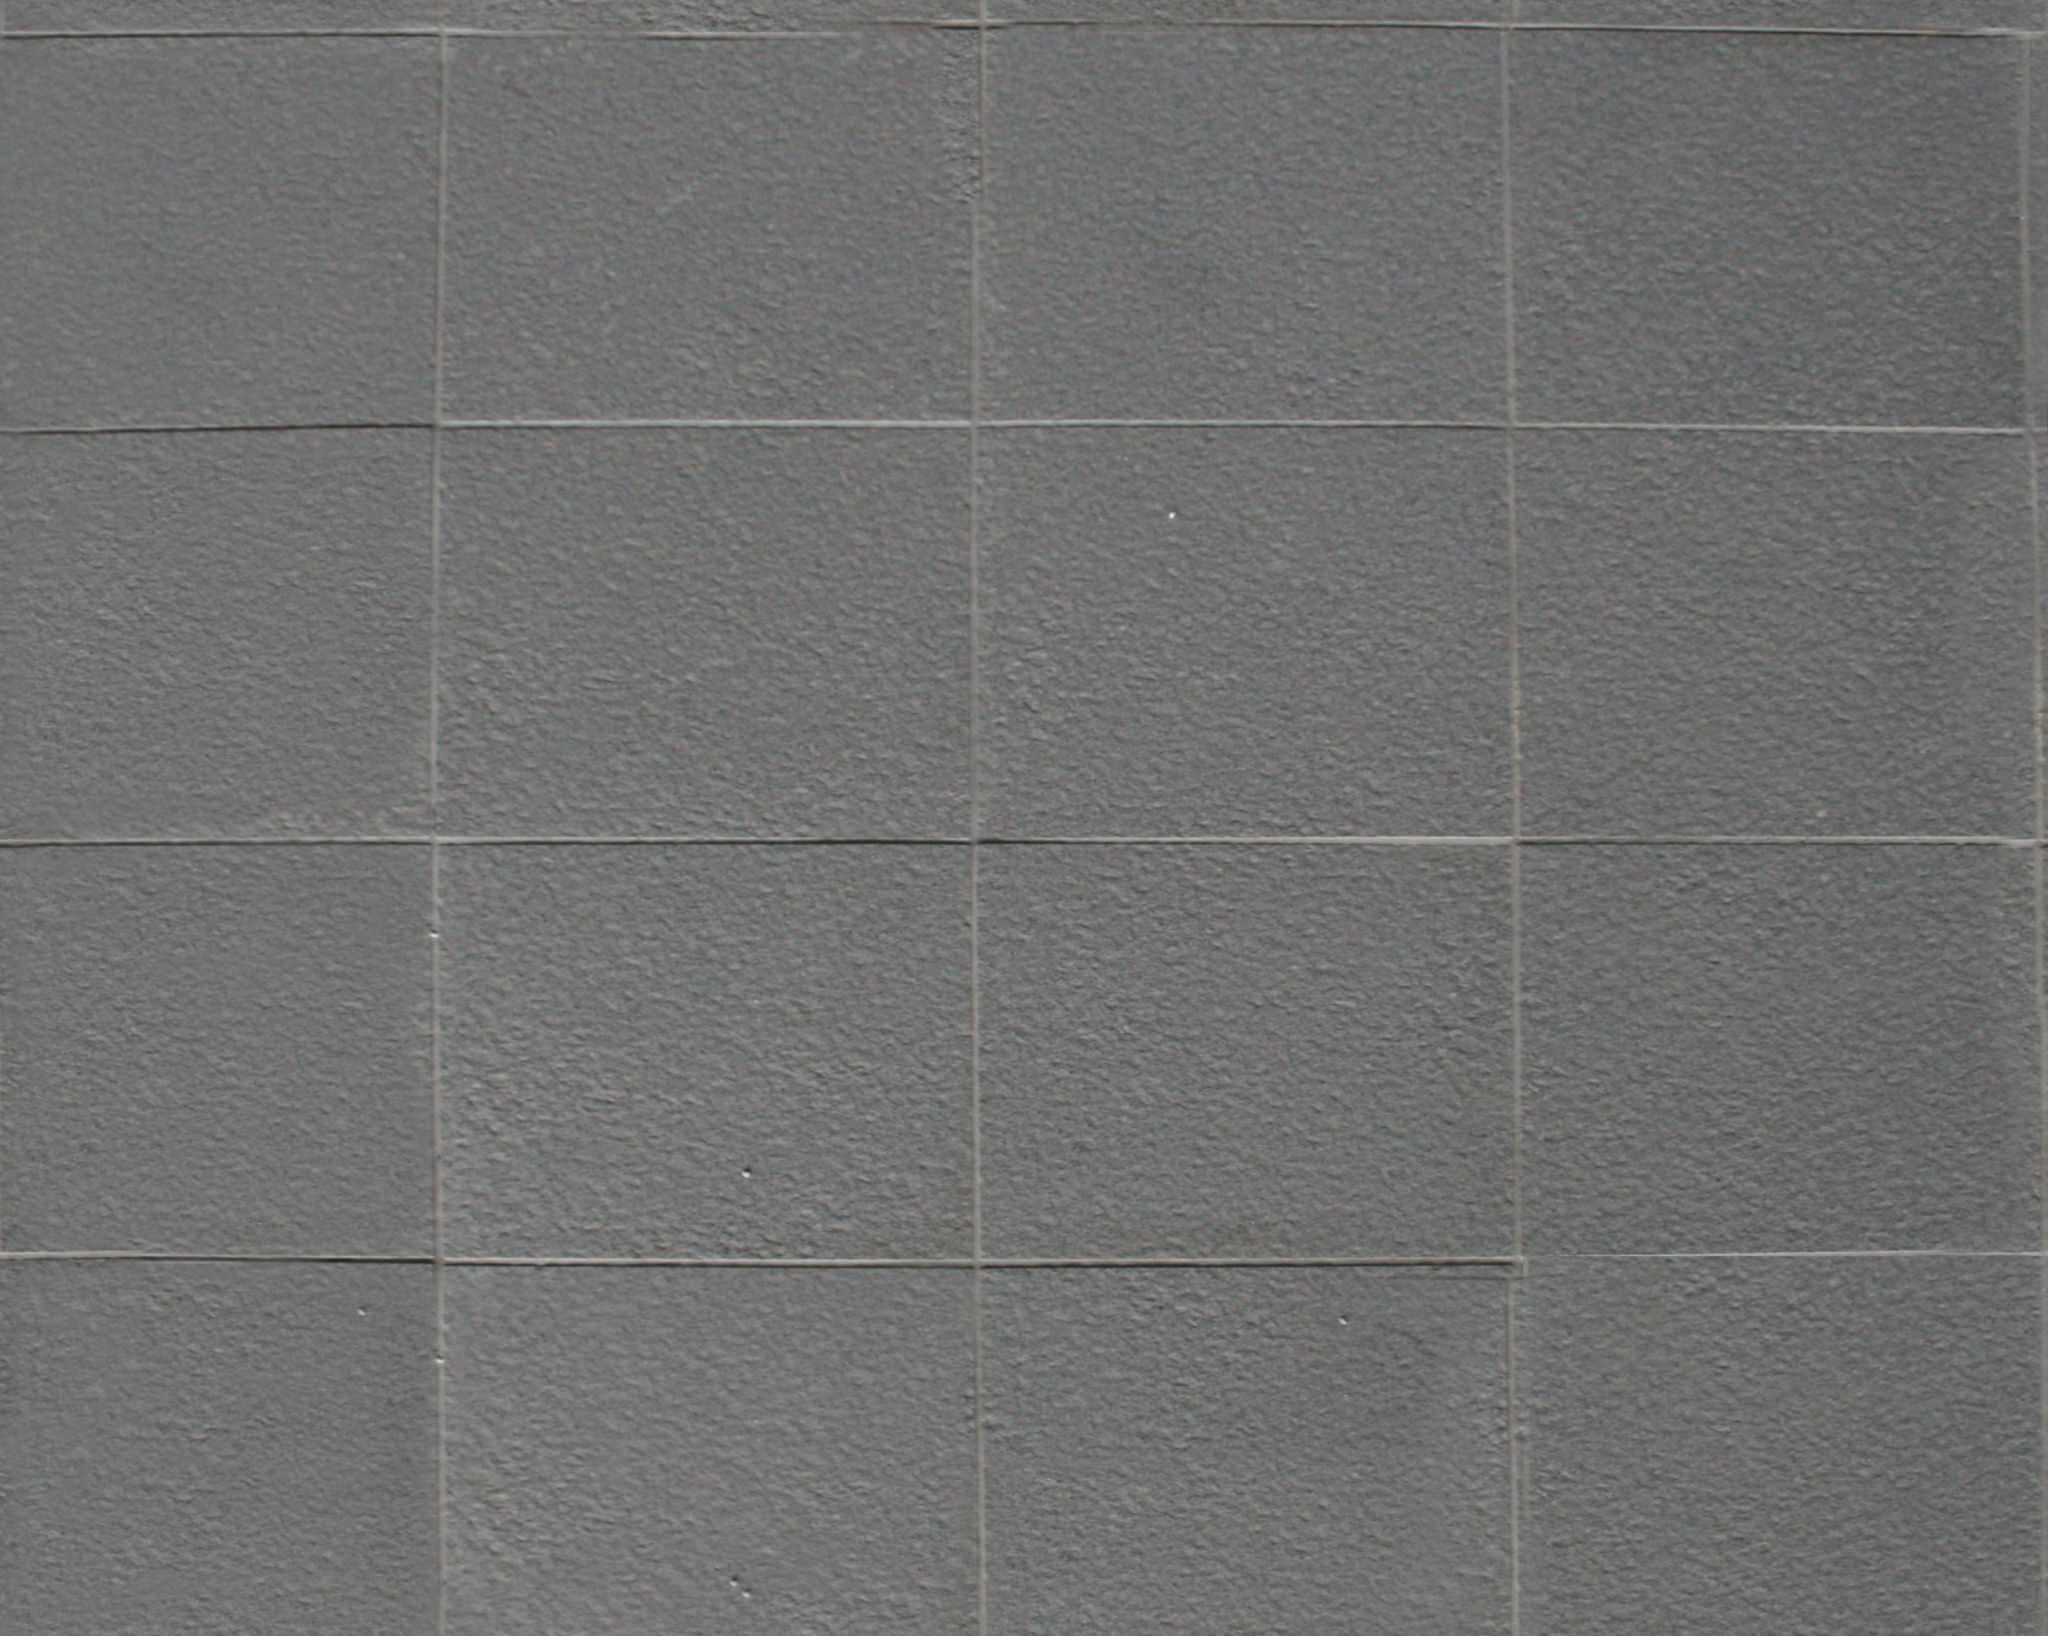 tileable texture tiles Paving Seamless  Tiles with normalmap Grey   Texture